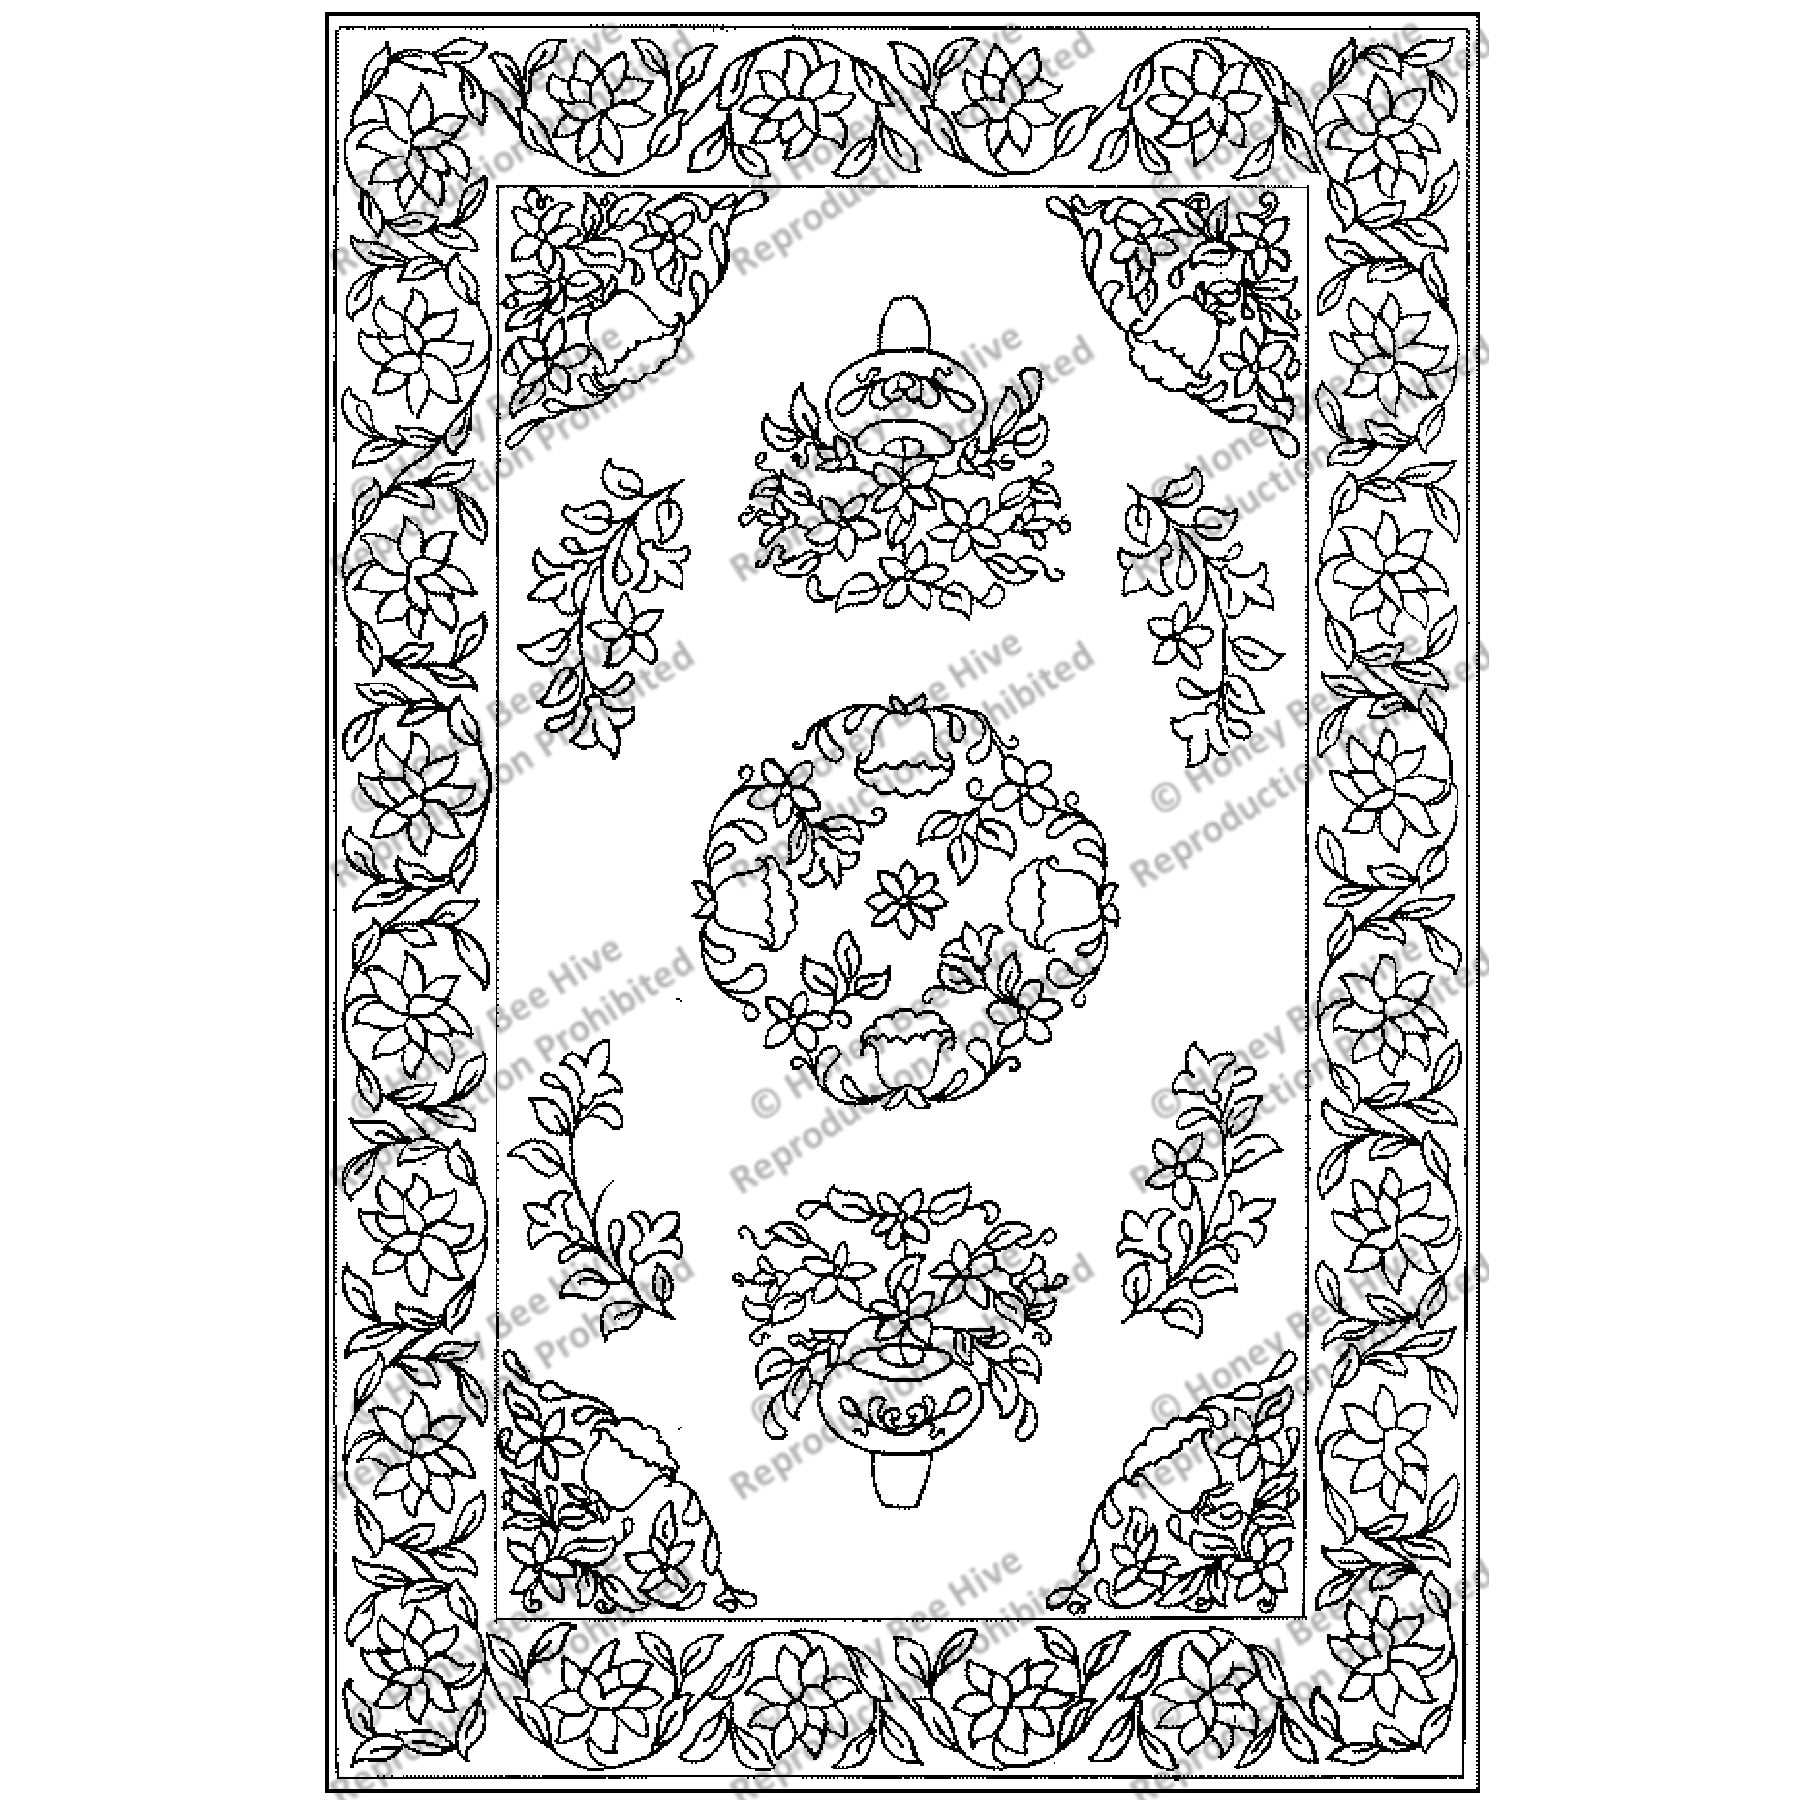 Ming-Song, rug hooking pattern